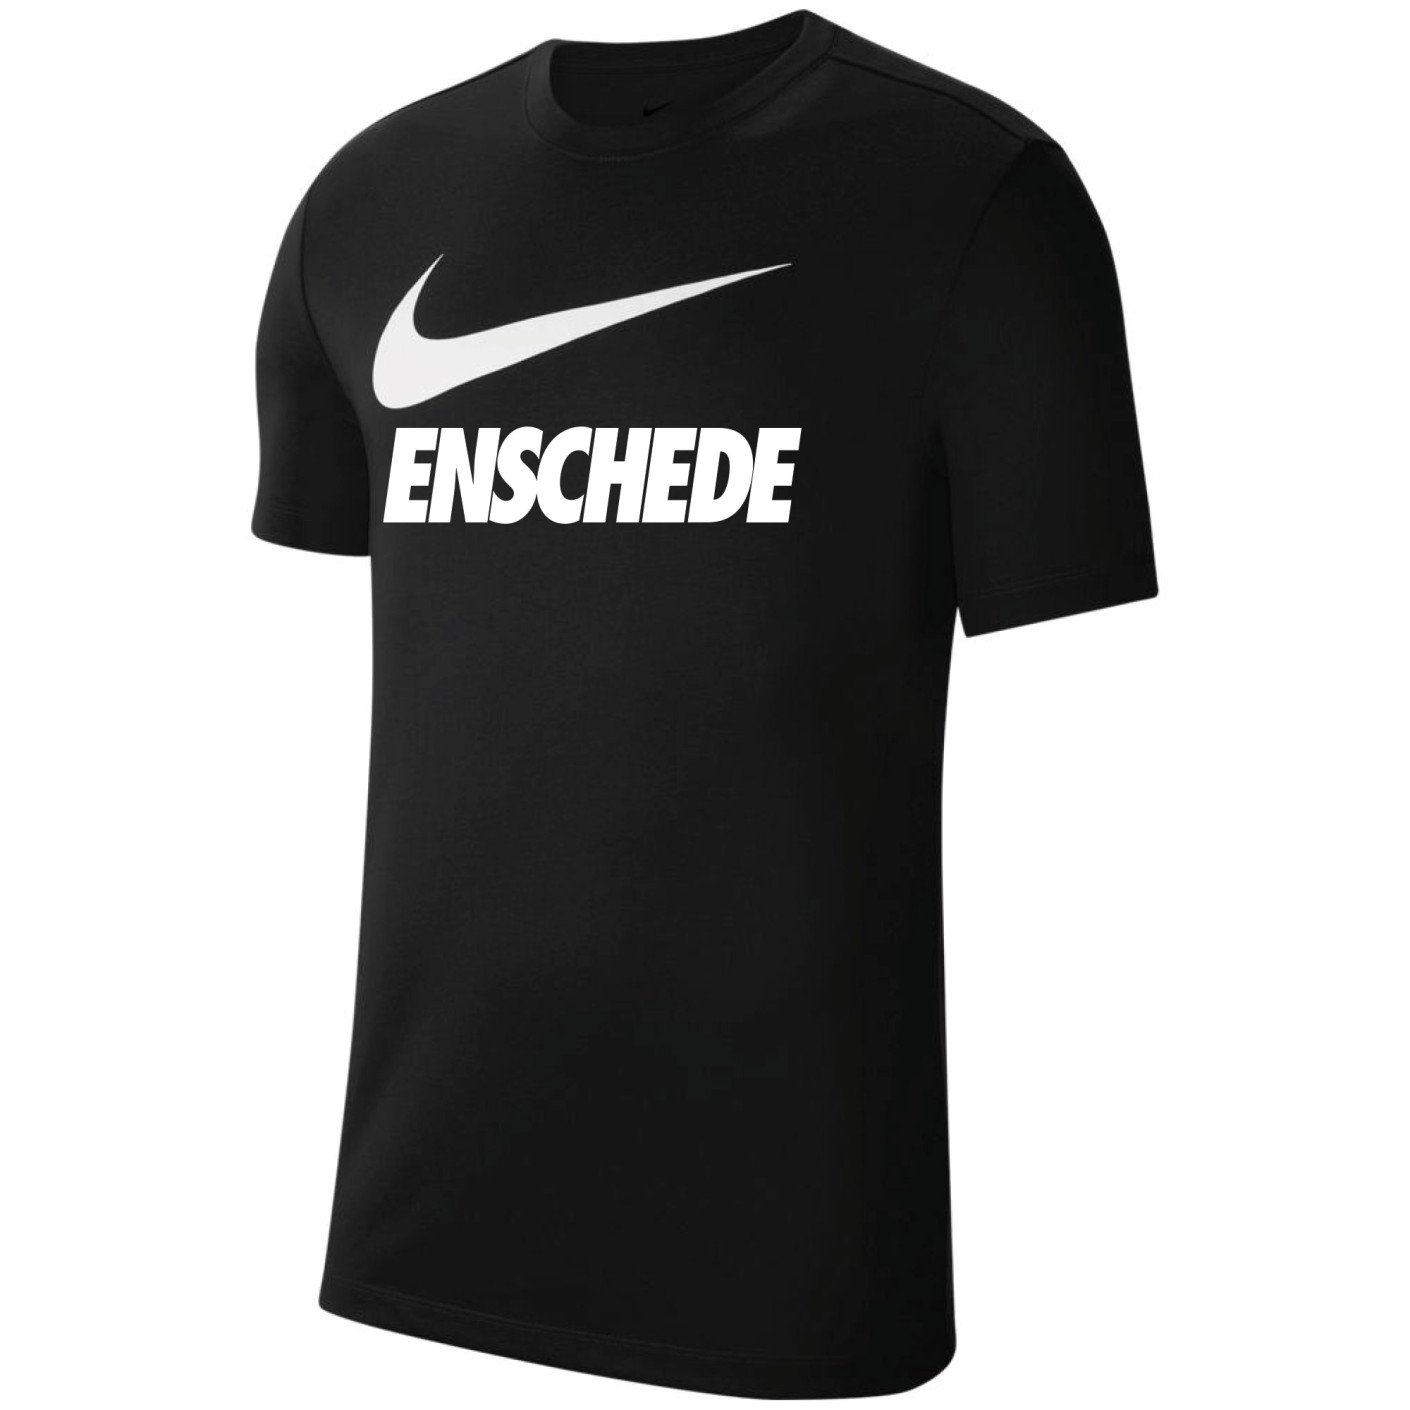 werkzaamheid zakdoek ondersteboven Nike Enschede Team Club Tee 20 Zwart Wit